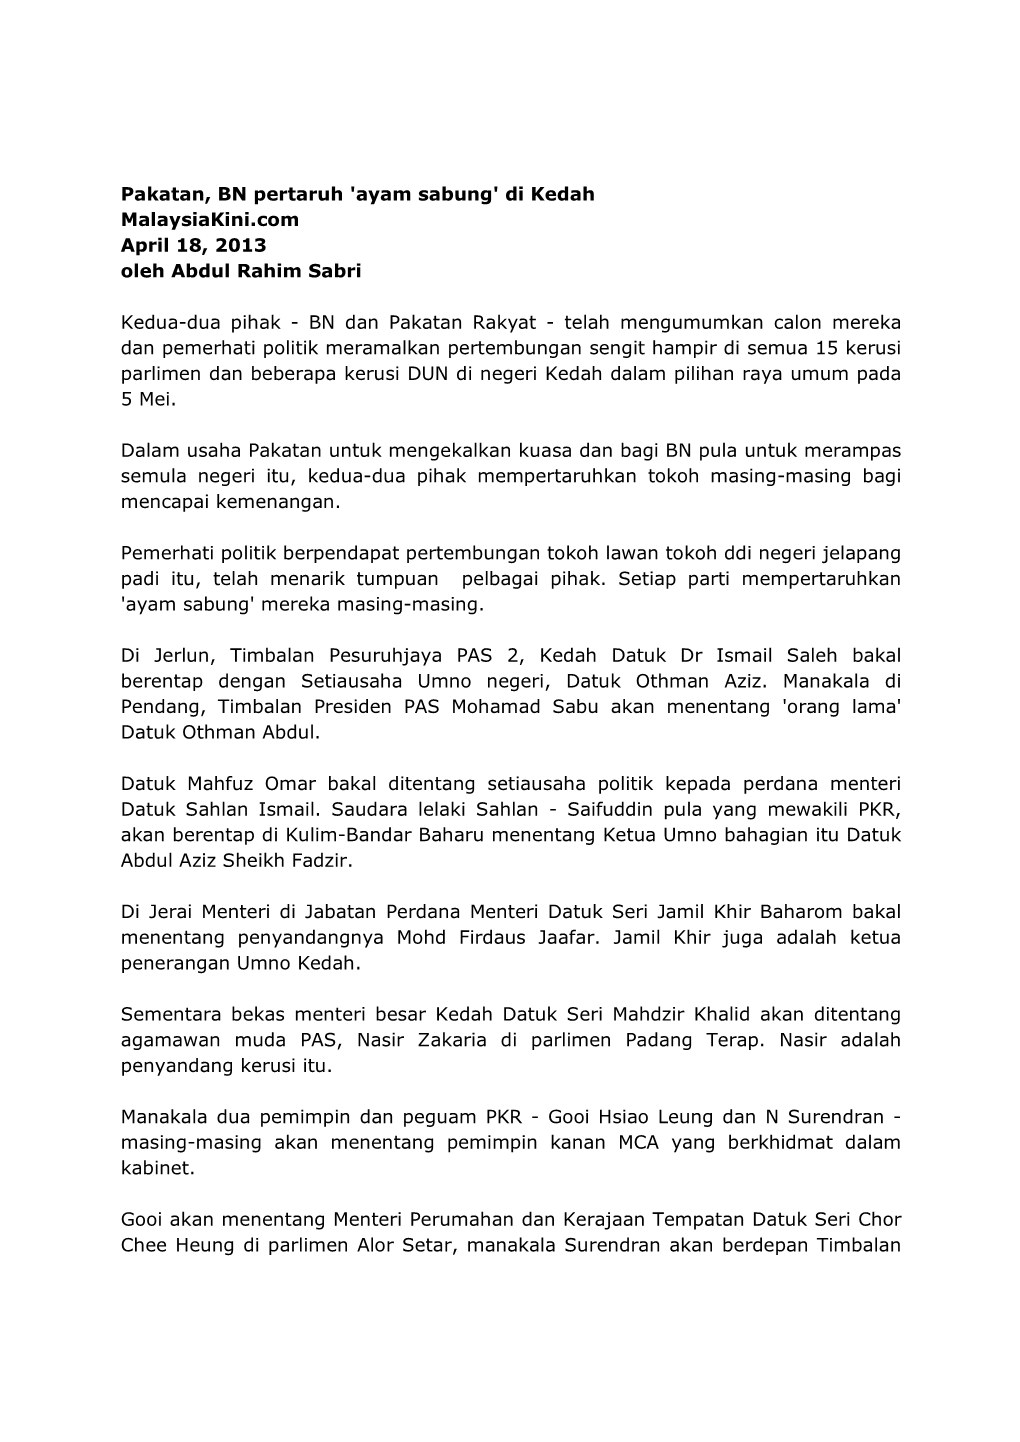 Pakatan, BN Pertaruh 'Ayam Sabung' Di Kedah Malaysiakini.Com April 18, 2013 Oleh Abdul Rahim Sabri